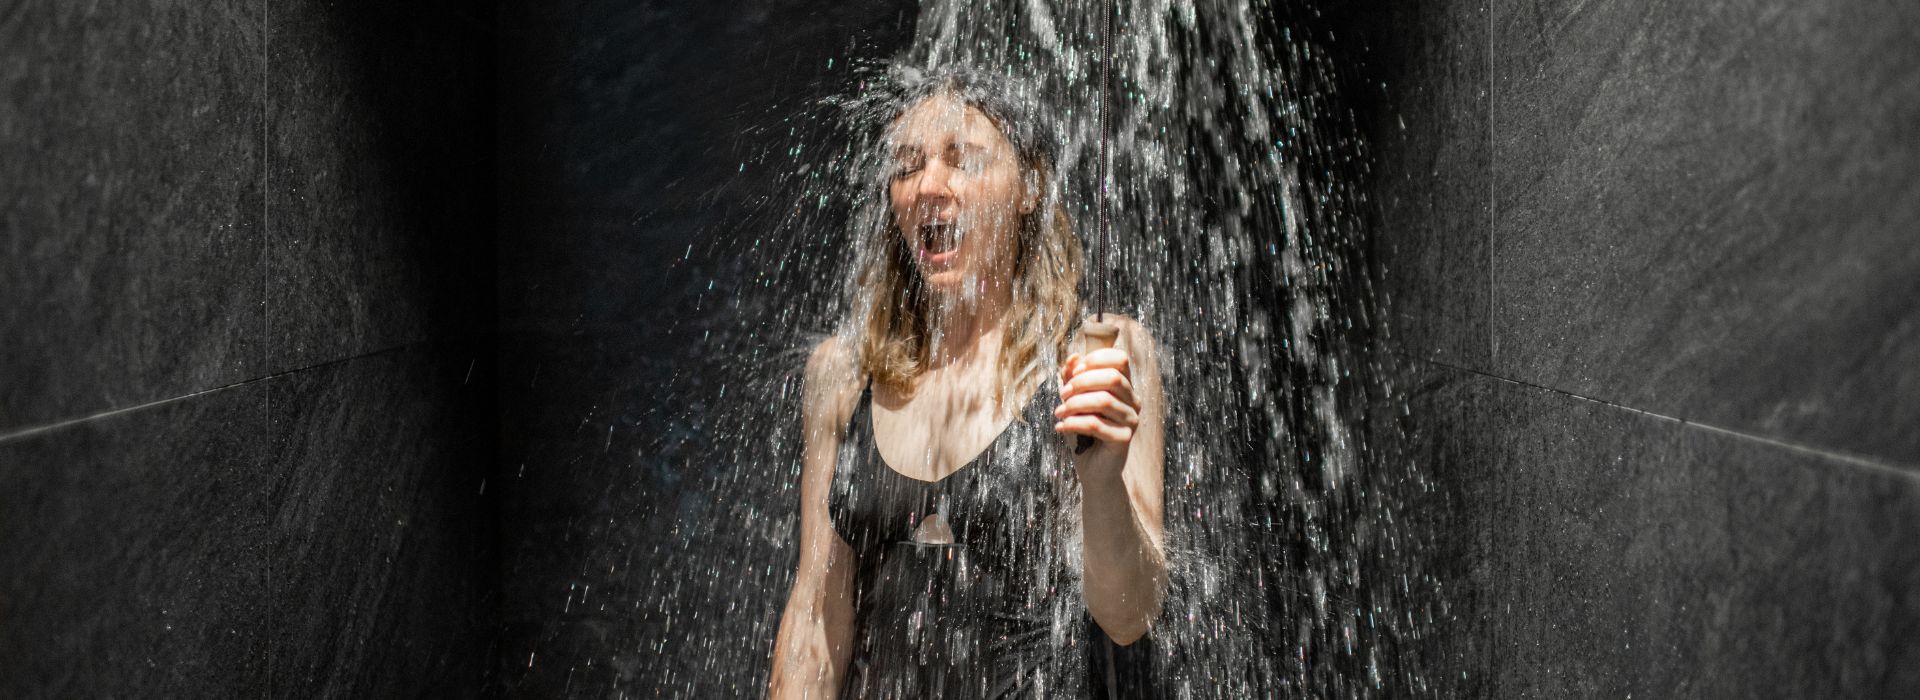 Woman under shower | How to live more joyfully | Shine Body & Bath Chakra Soap | Blog